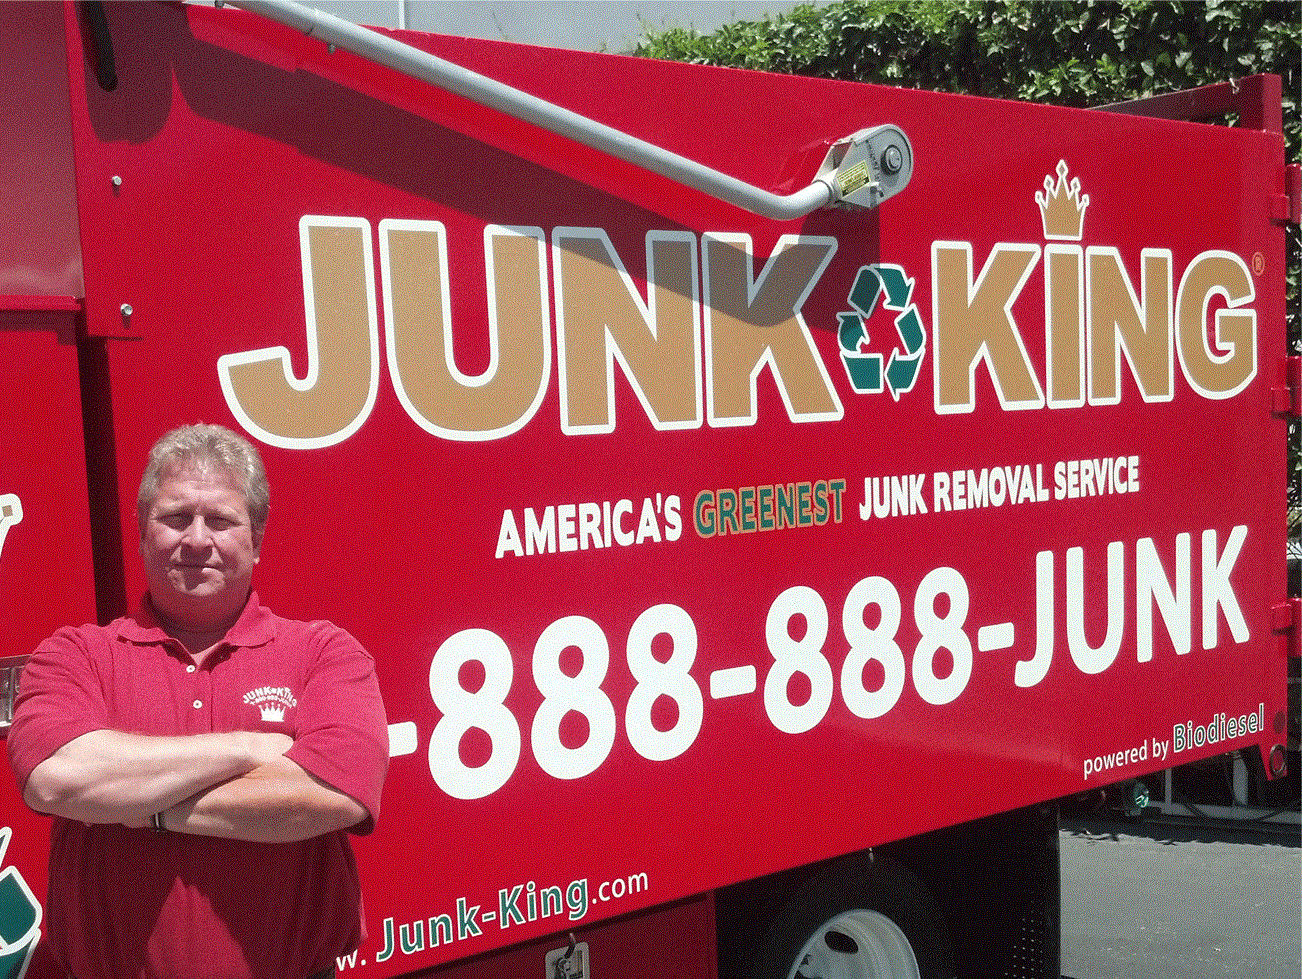 Junk King Franchise Owner,  Lee Turrini.